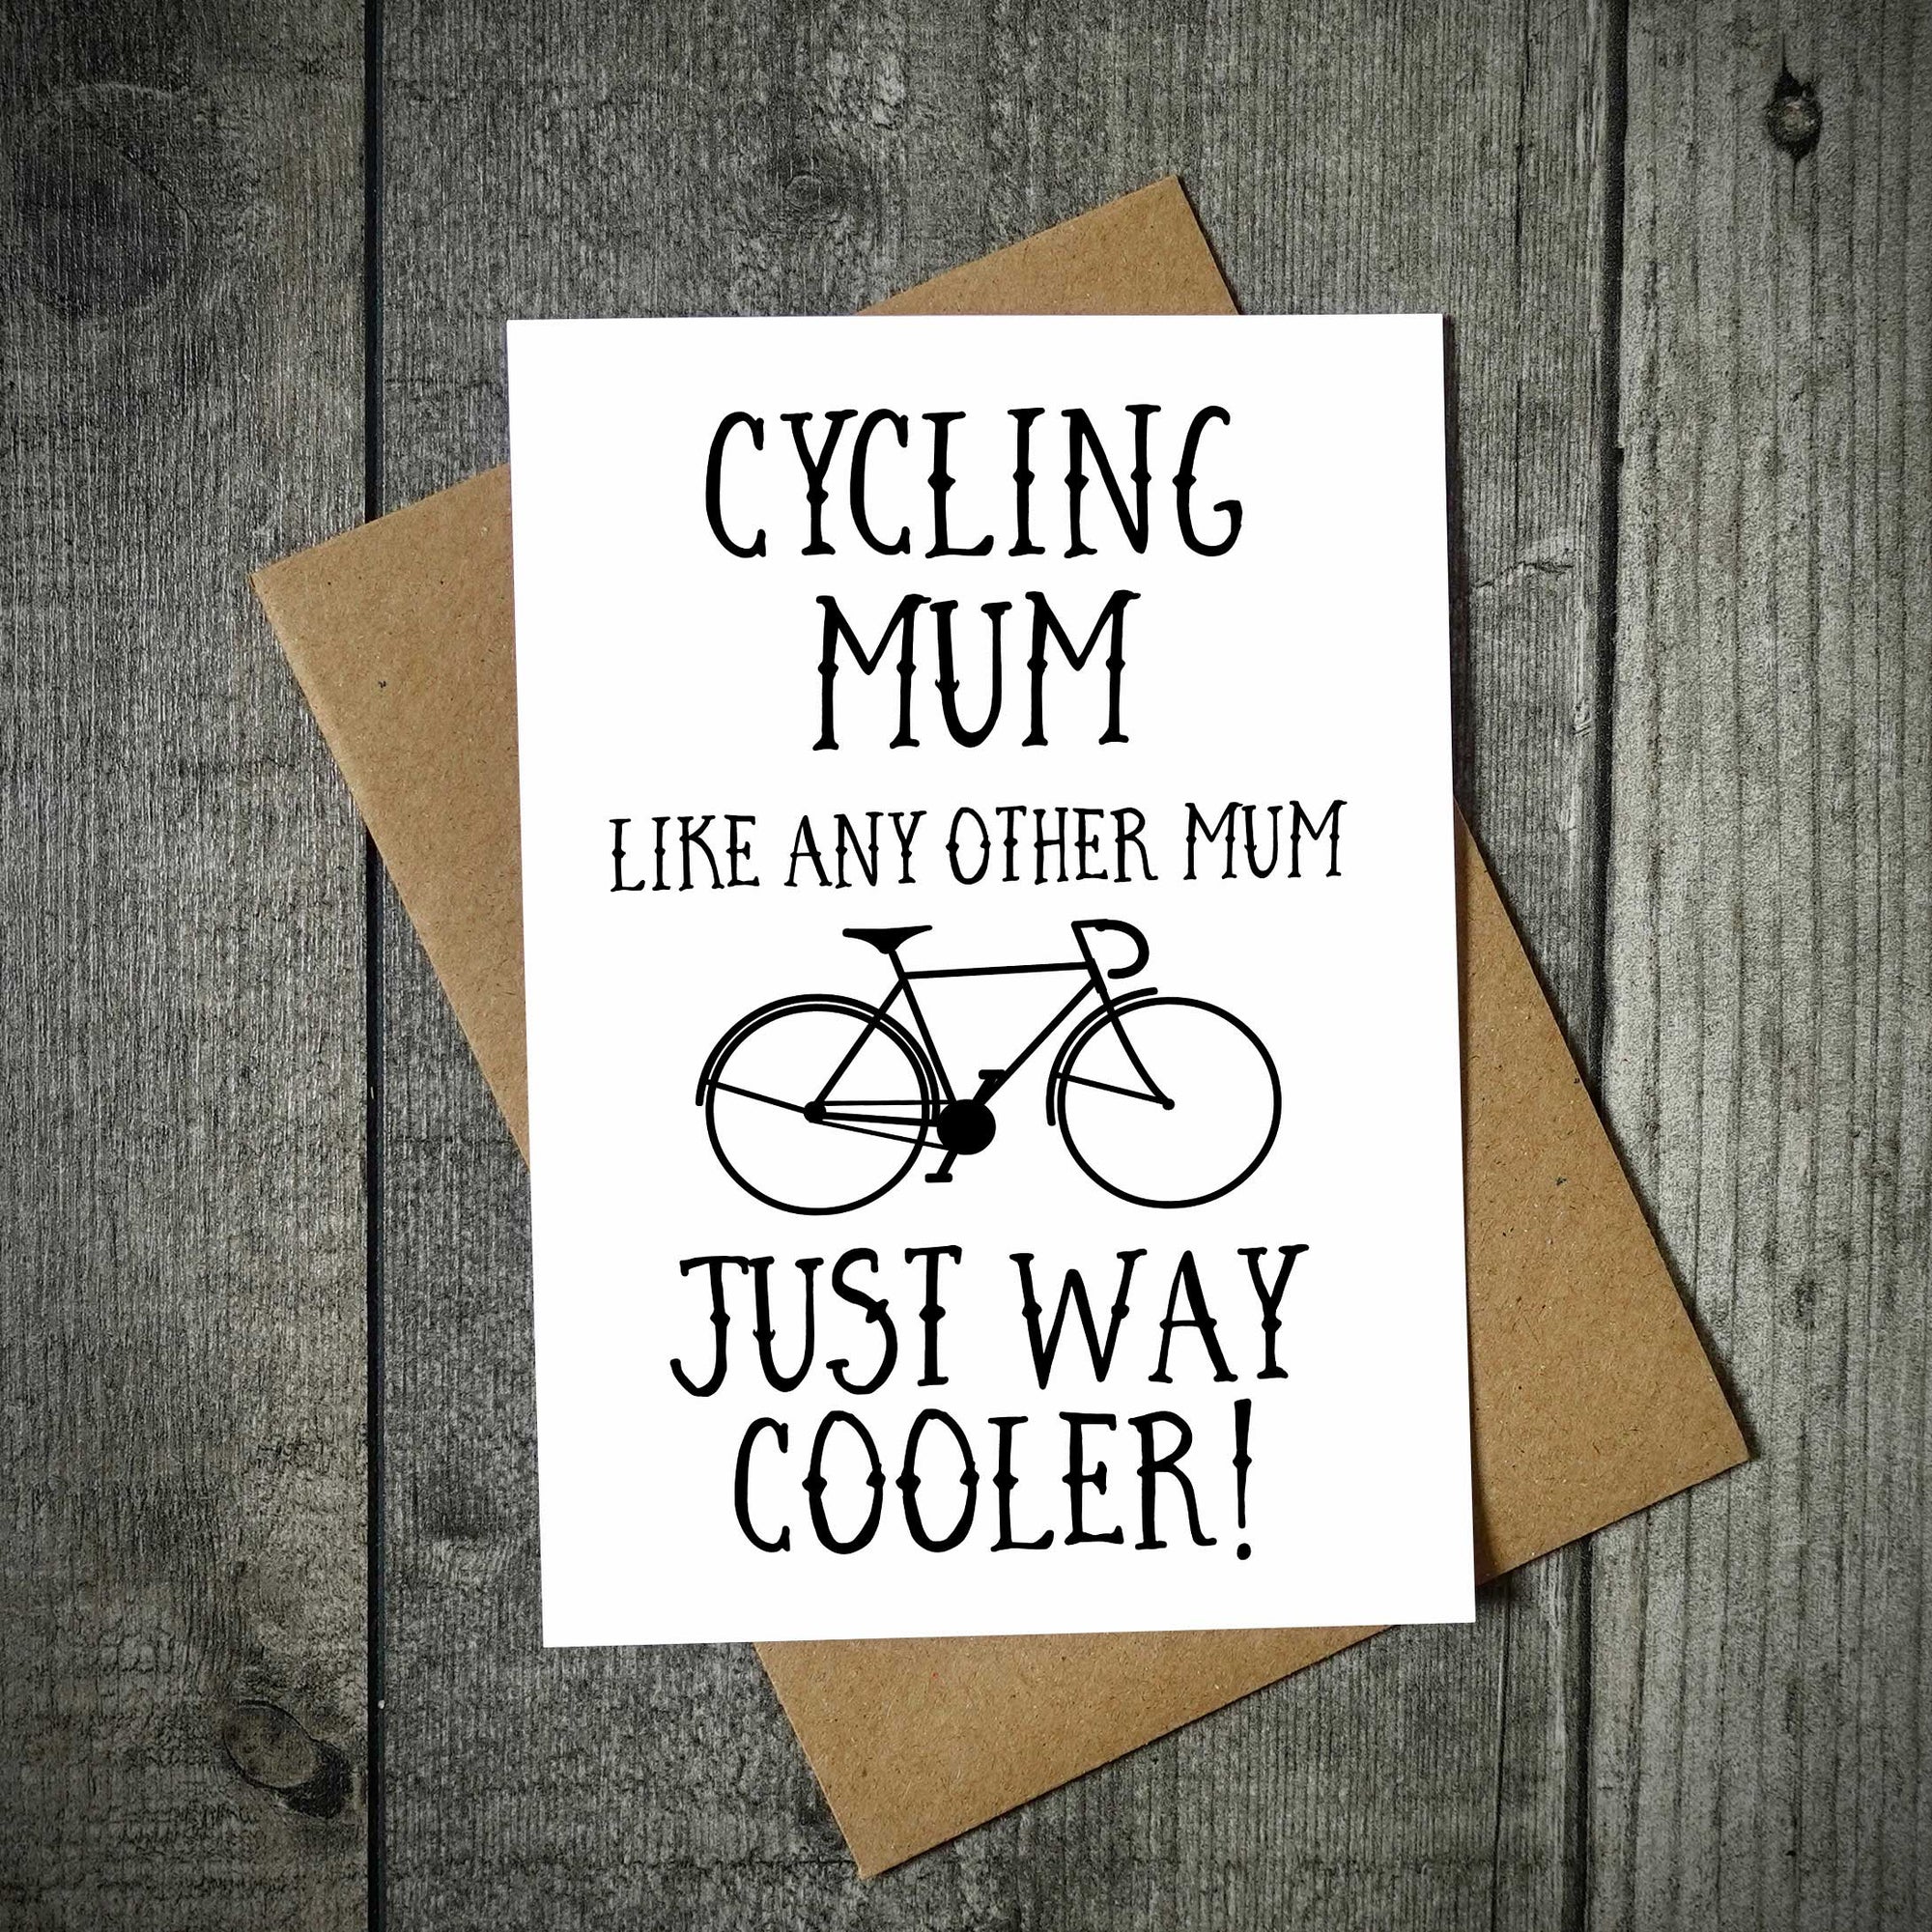 Cycling Mum Cycling Card